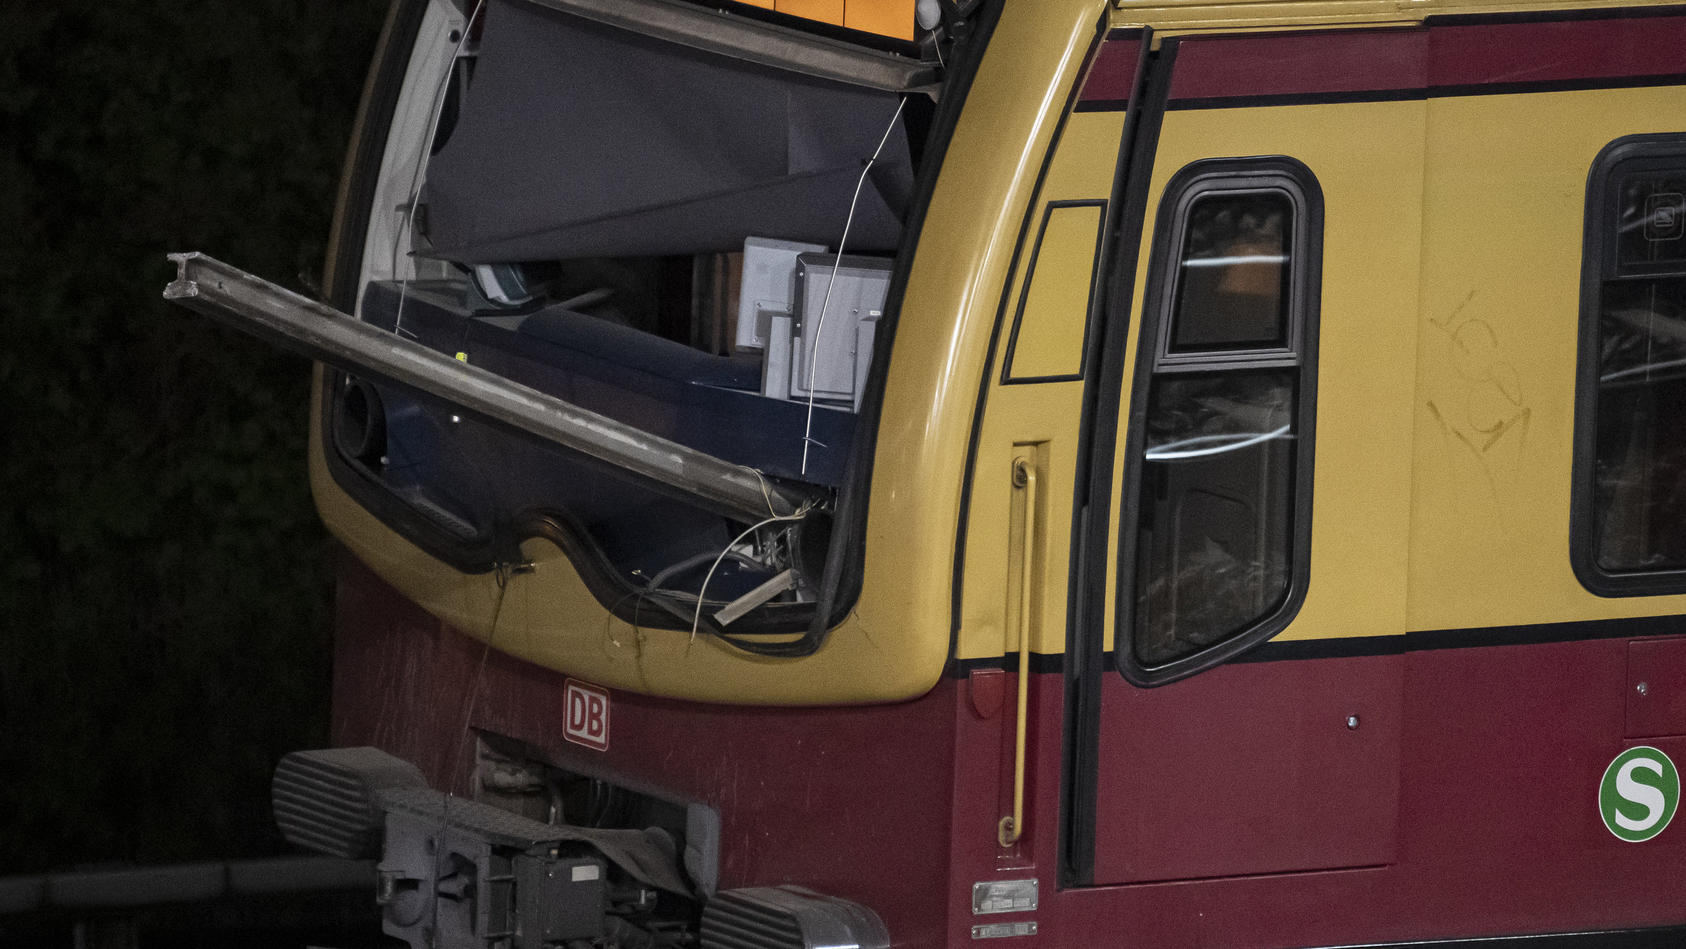 SBahnUnfall in Berlin Schiene bohrt sich in Fahrerkabine